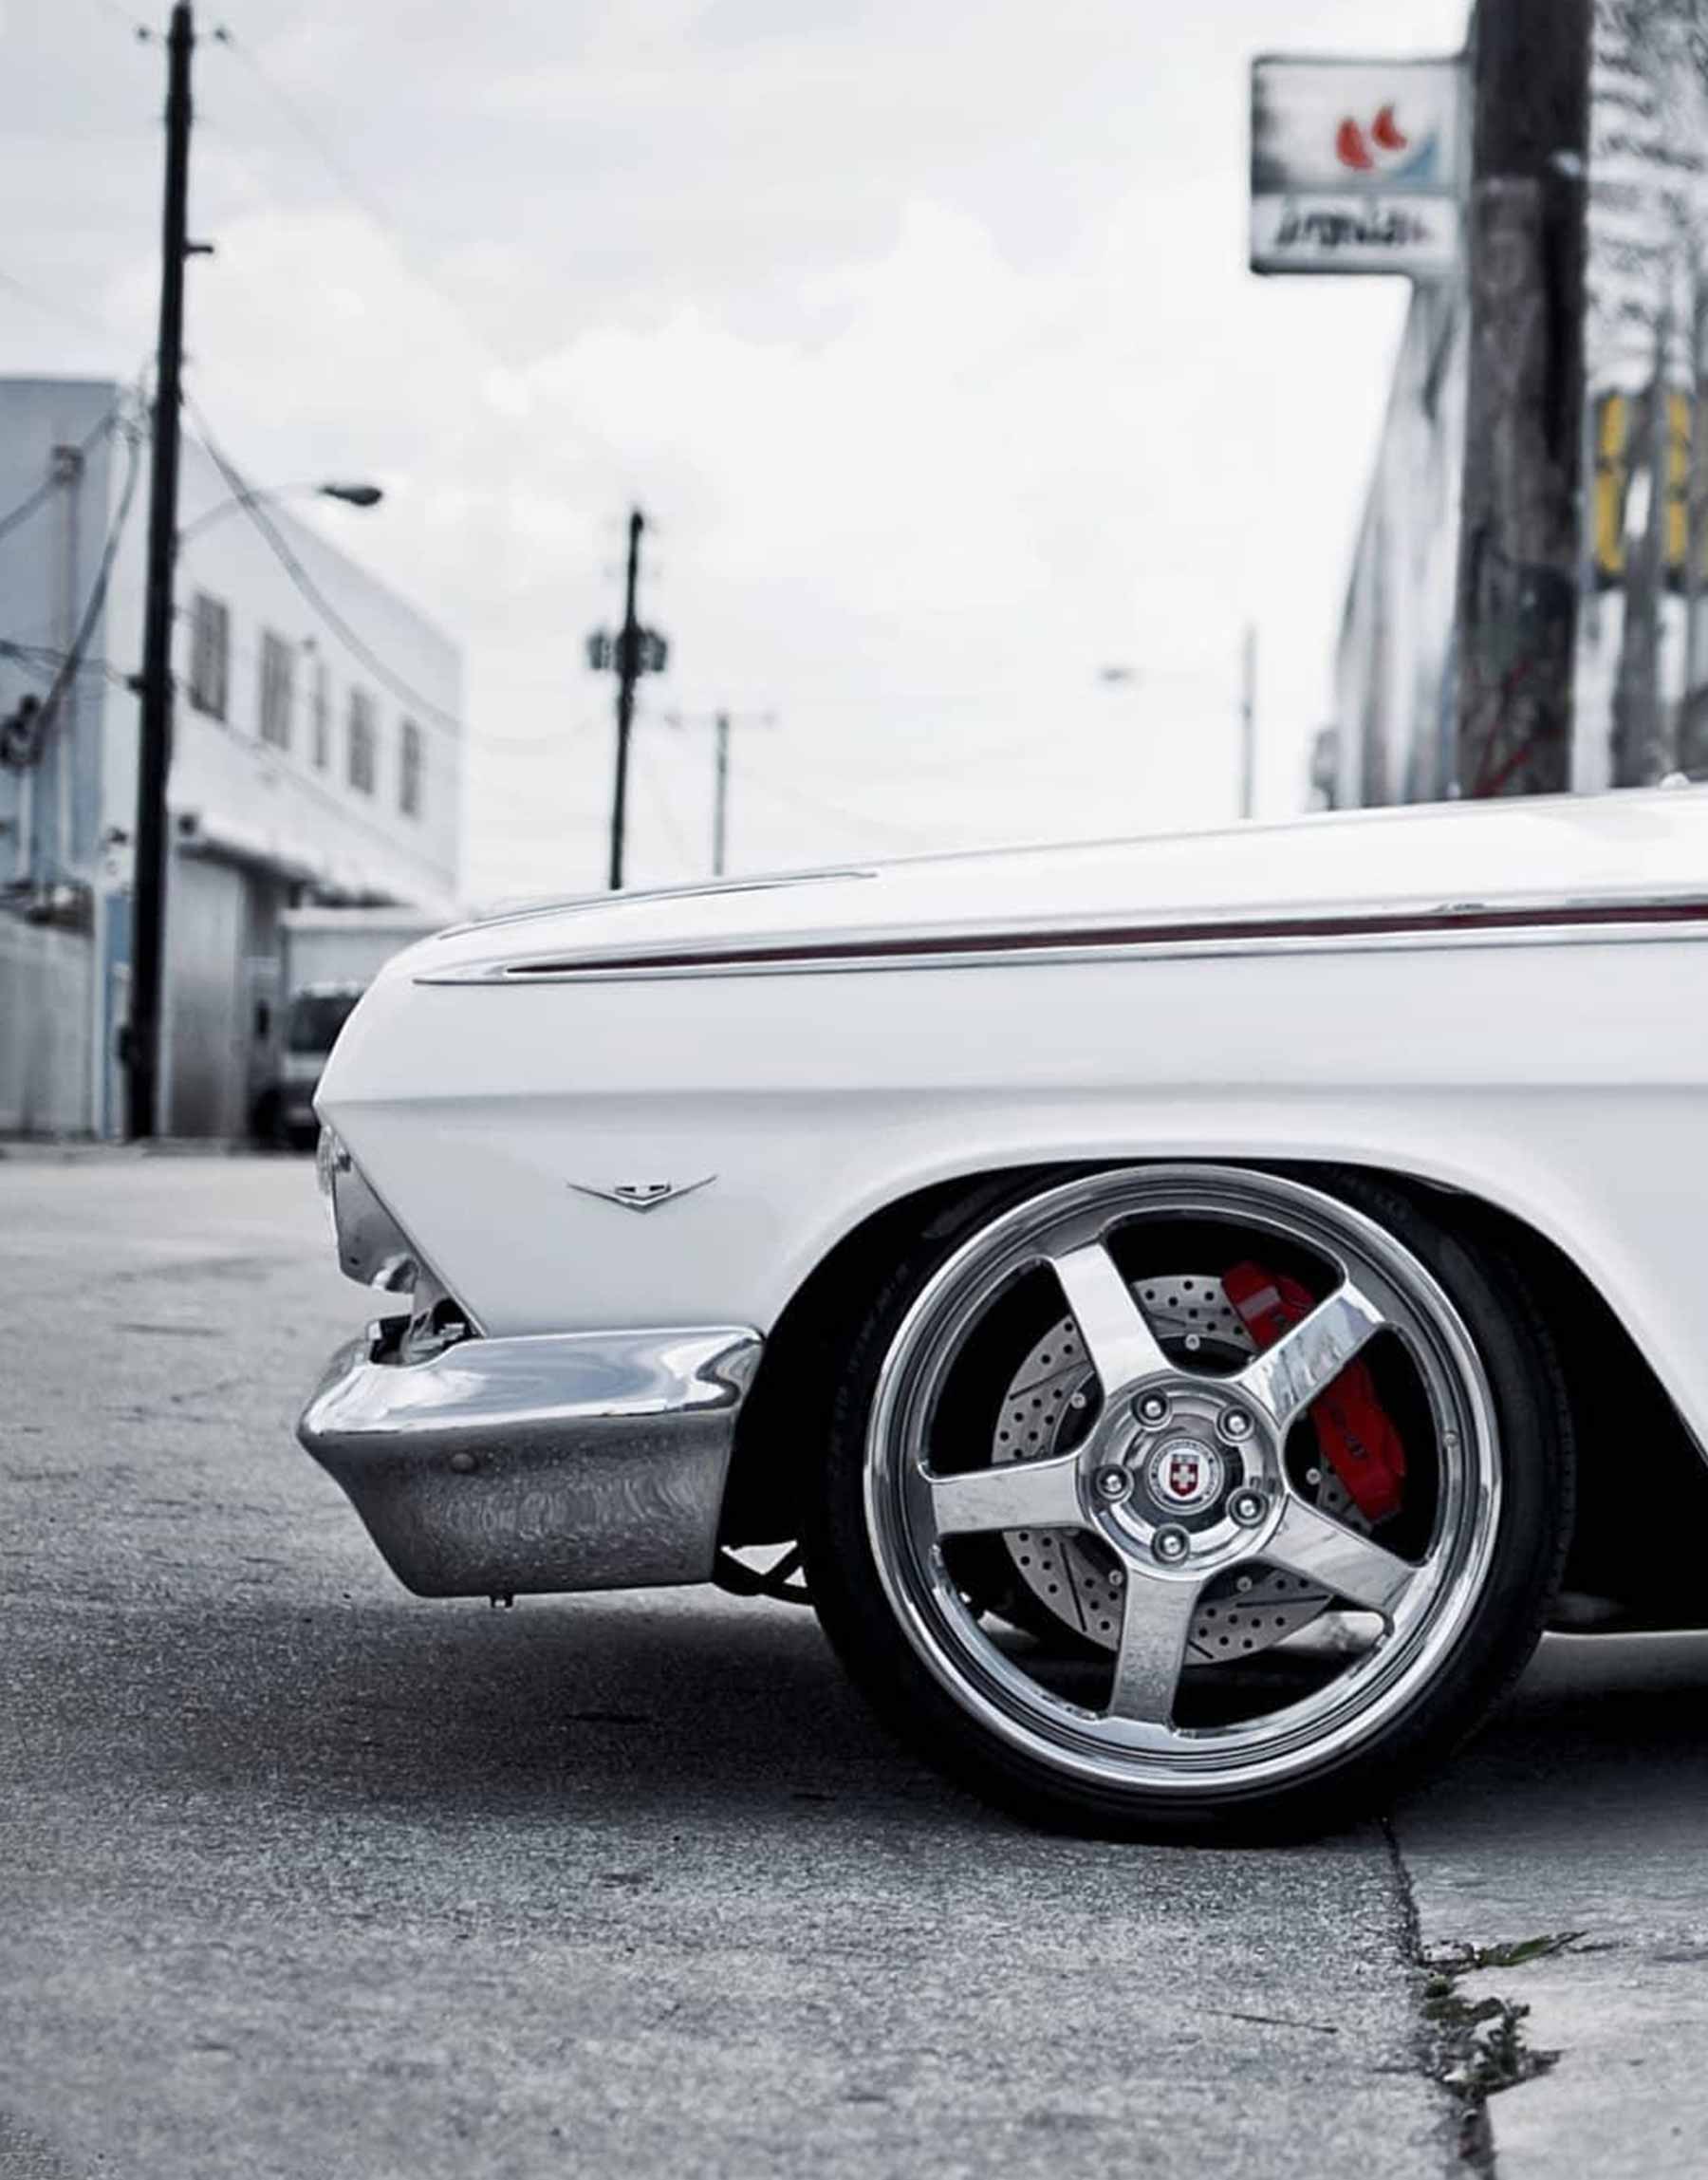 Blur White Car Photo Editing Background Free Stock Image